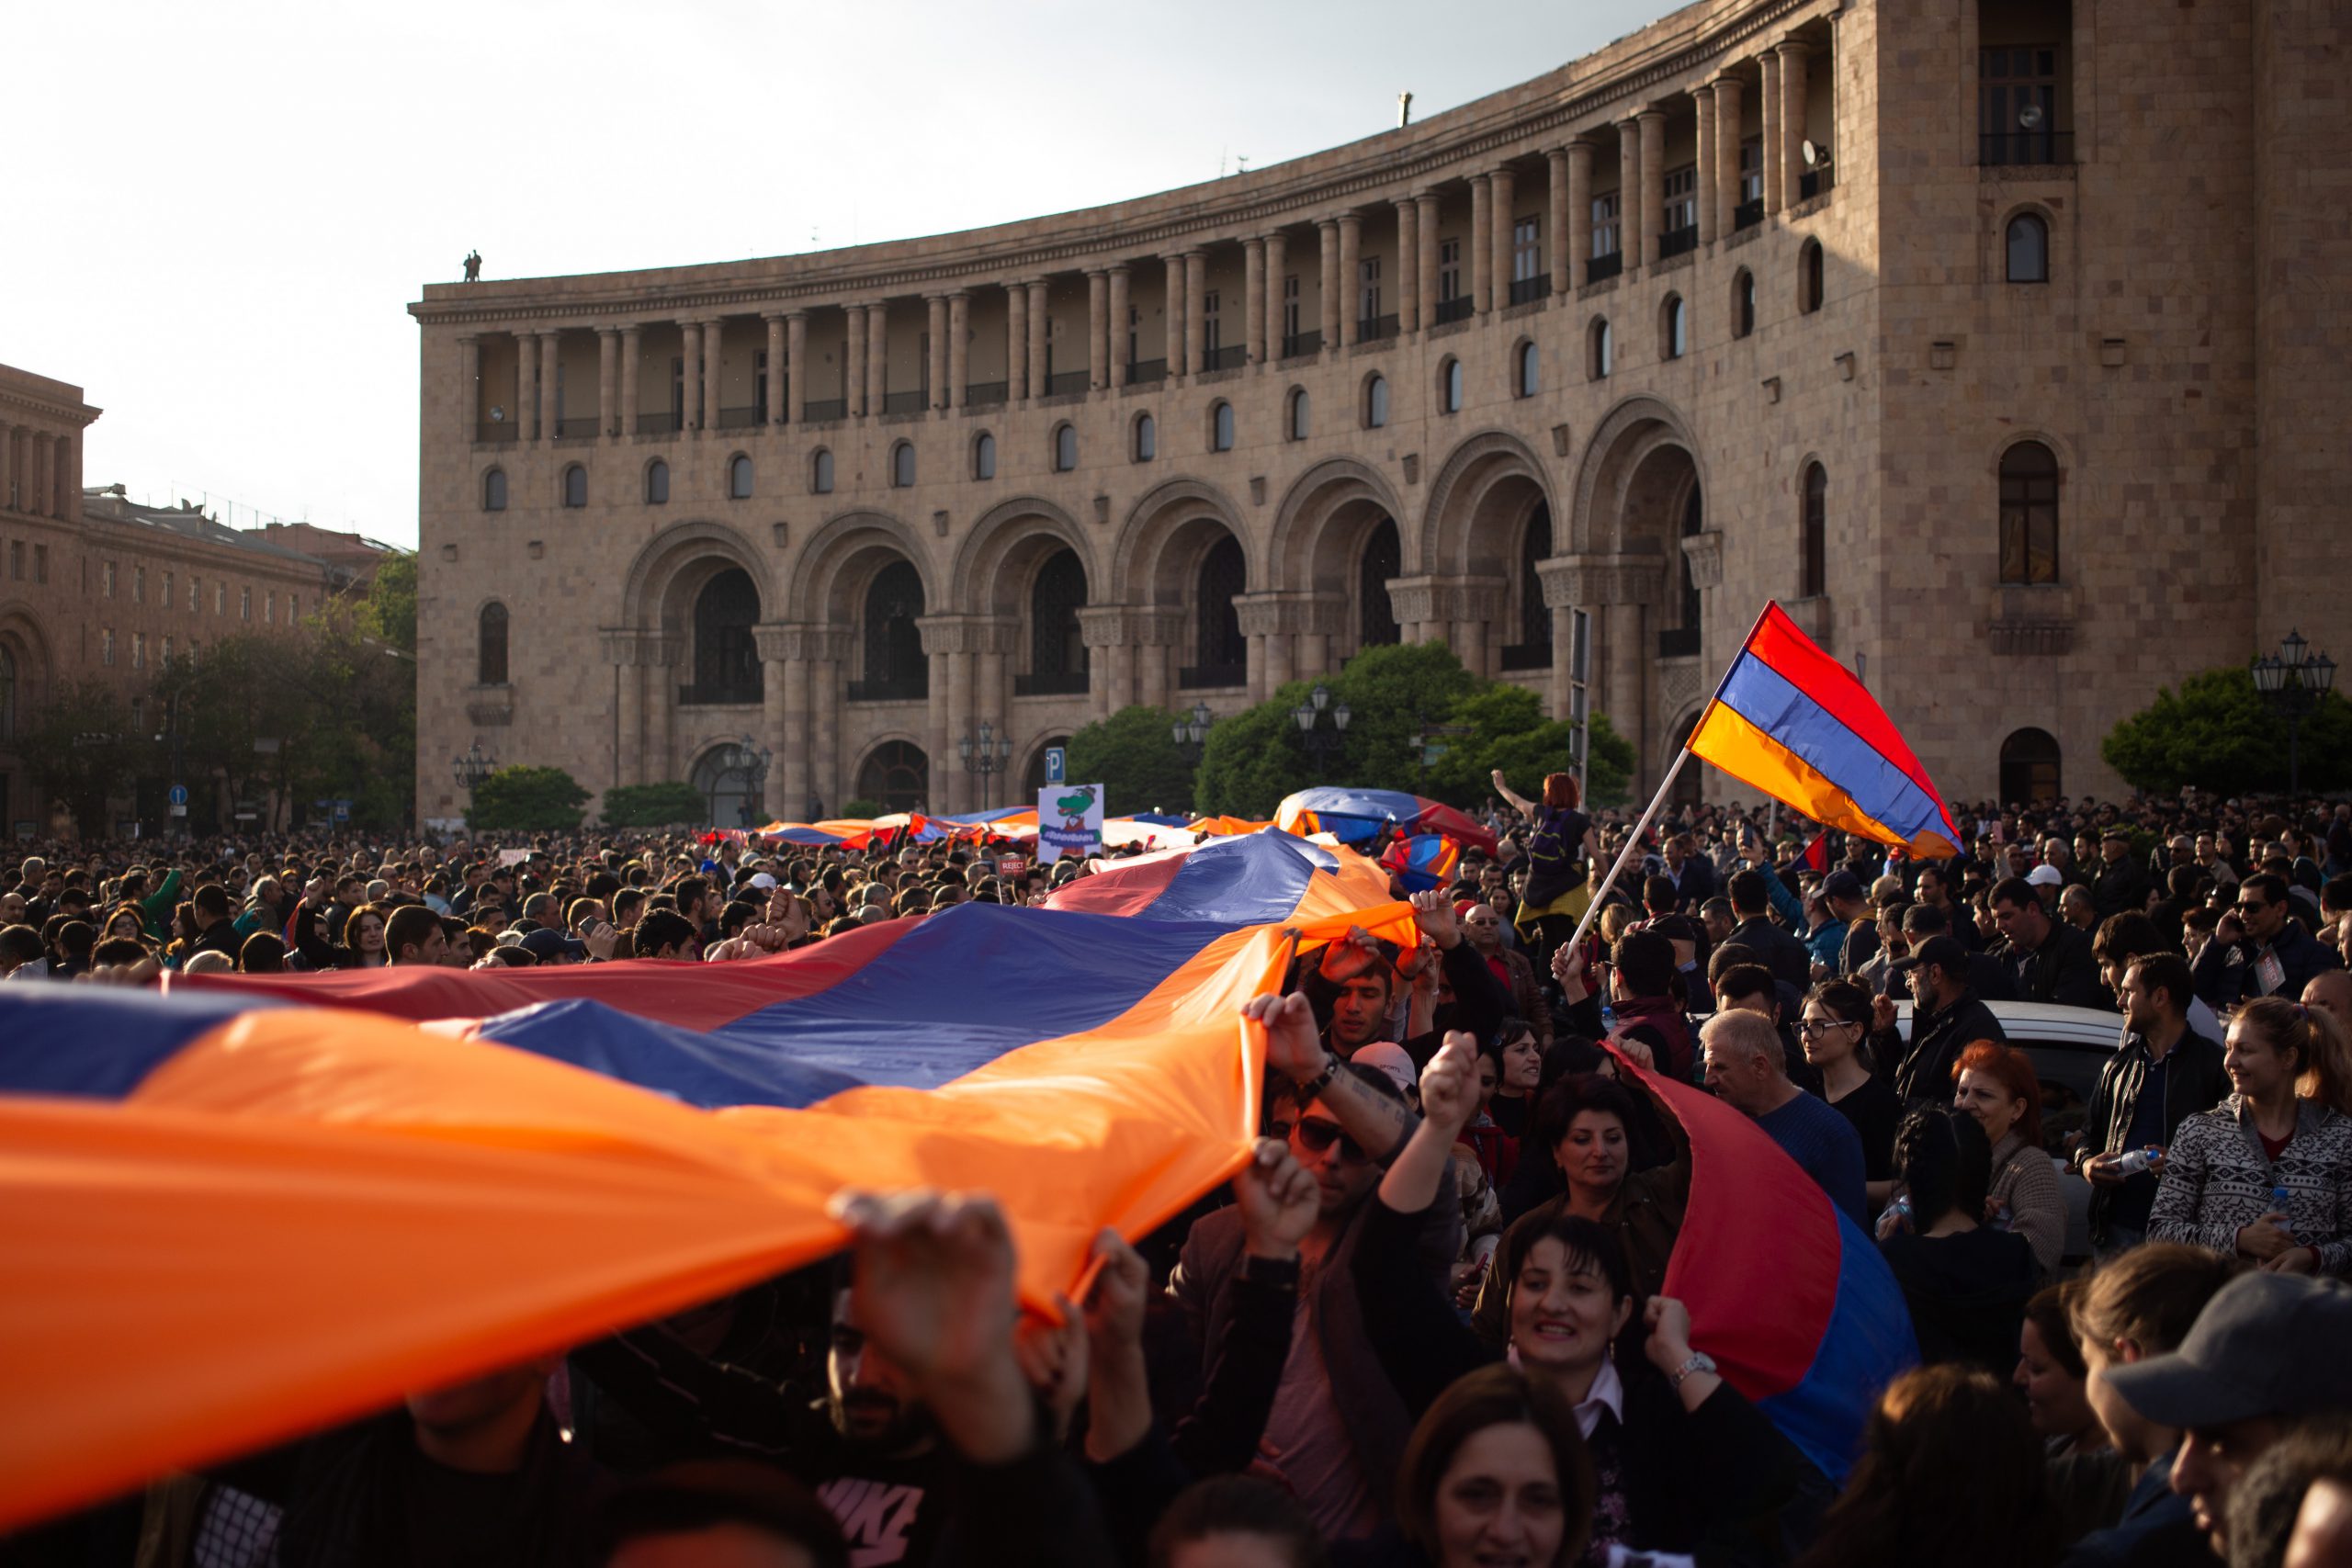 US-Based Watchdog Highlights Armenia's Democratic Backslide Under Pashinyan's Rule